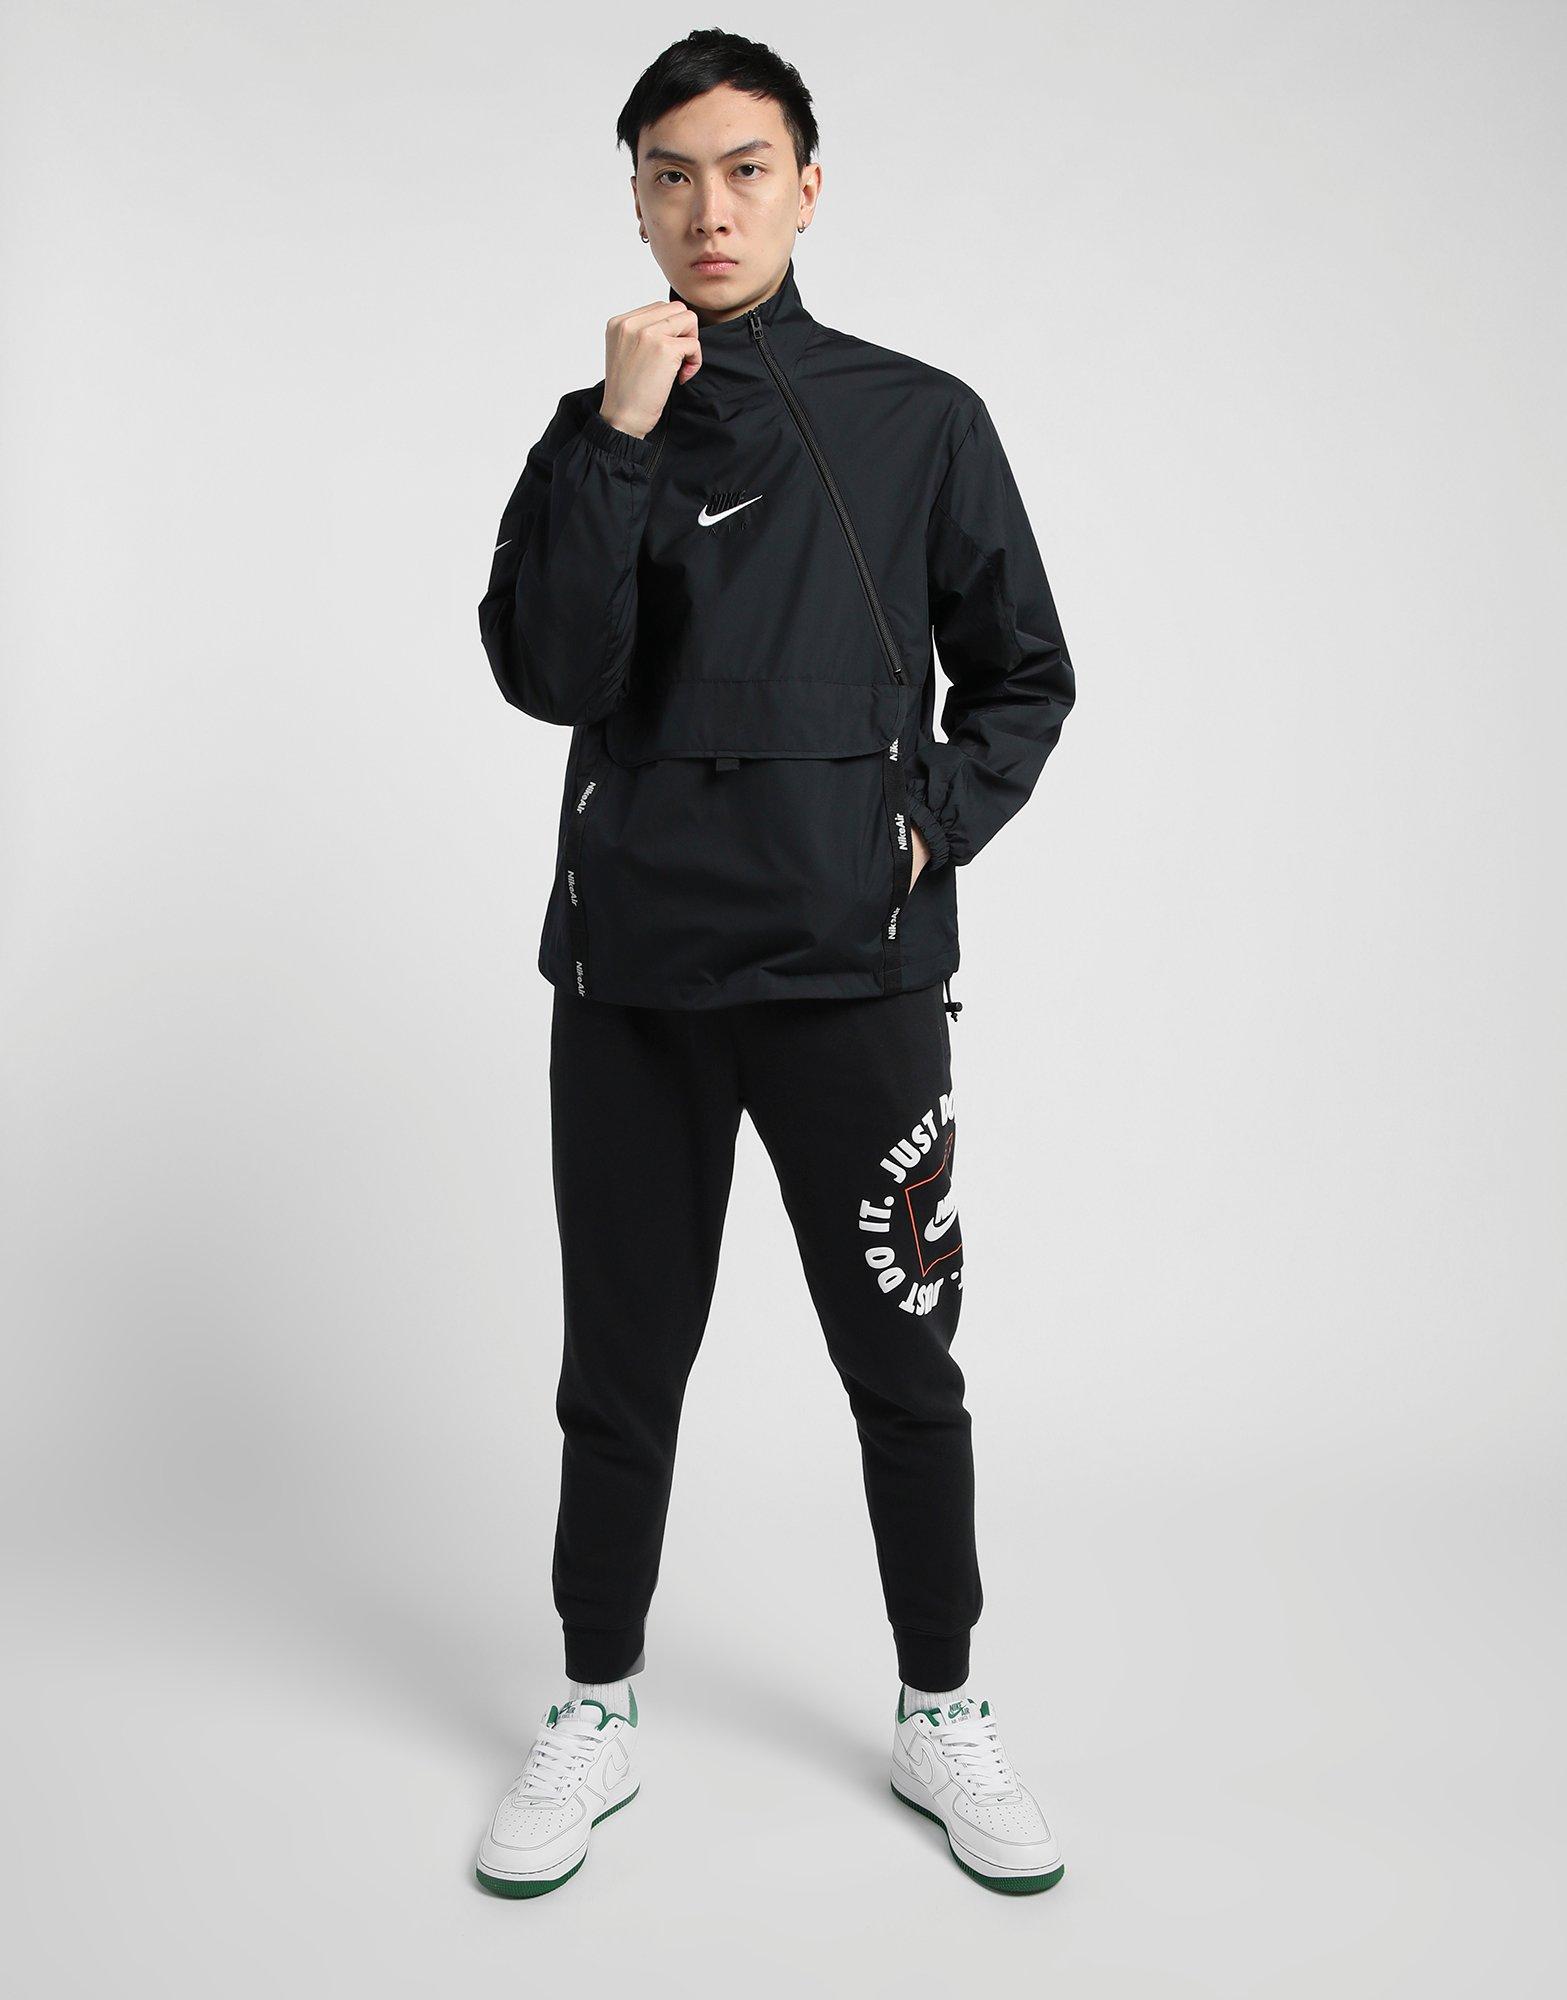 Black Nike Air Woven Jacket | JD Sports